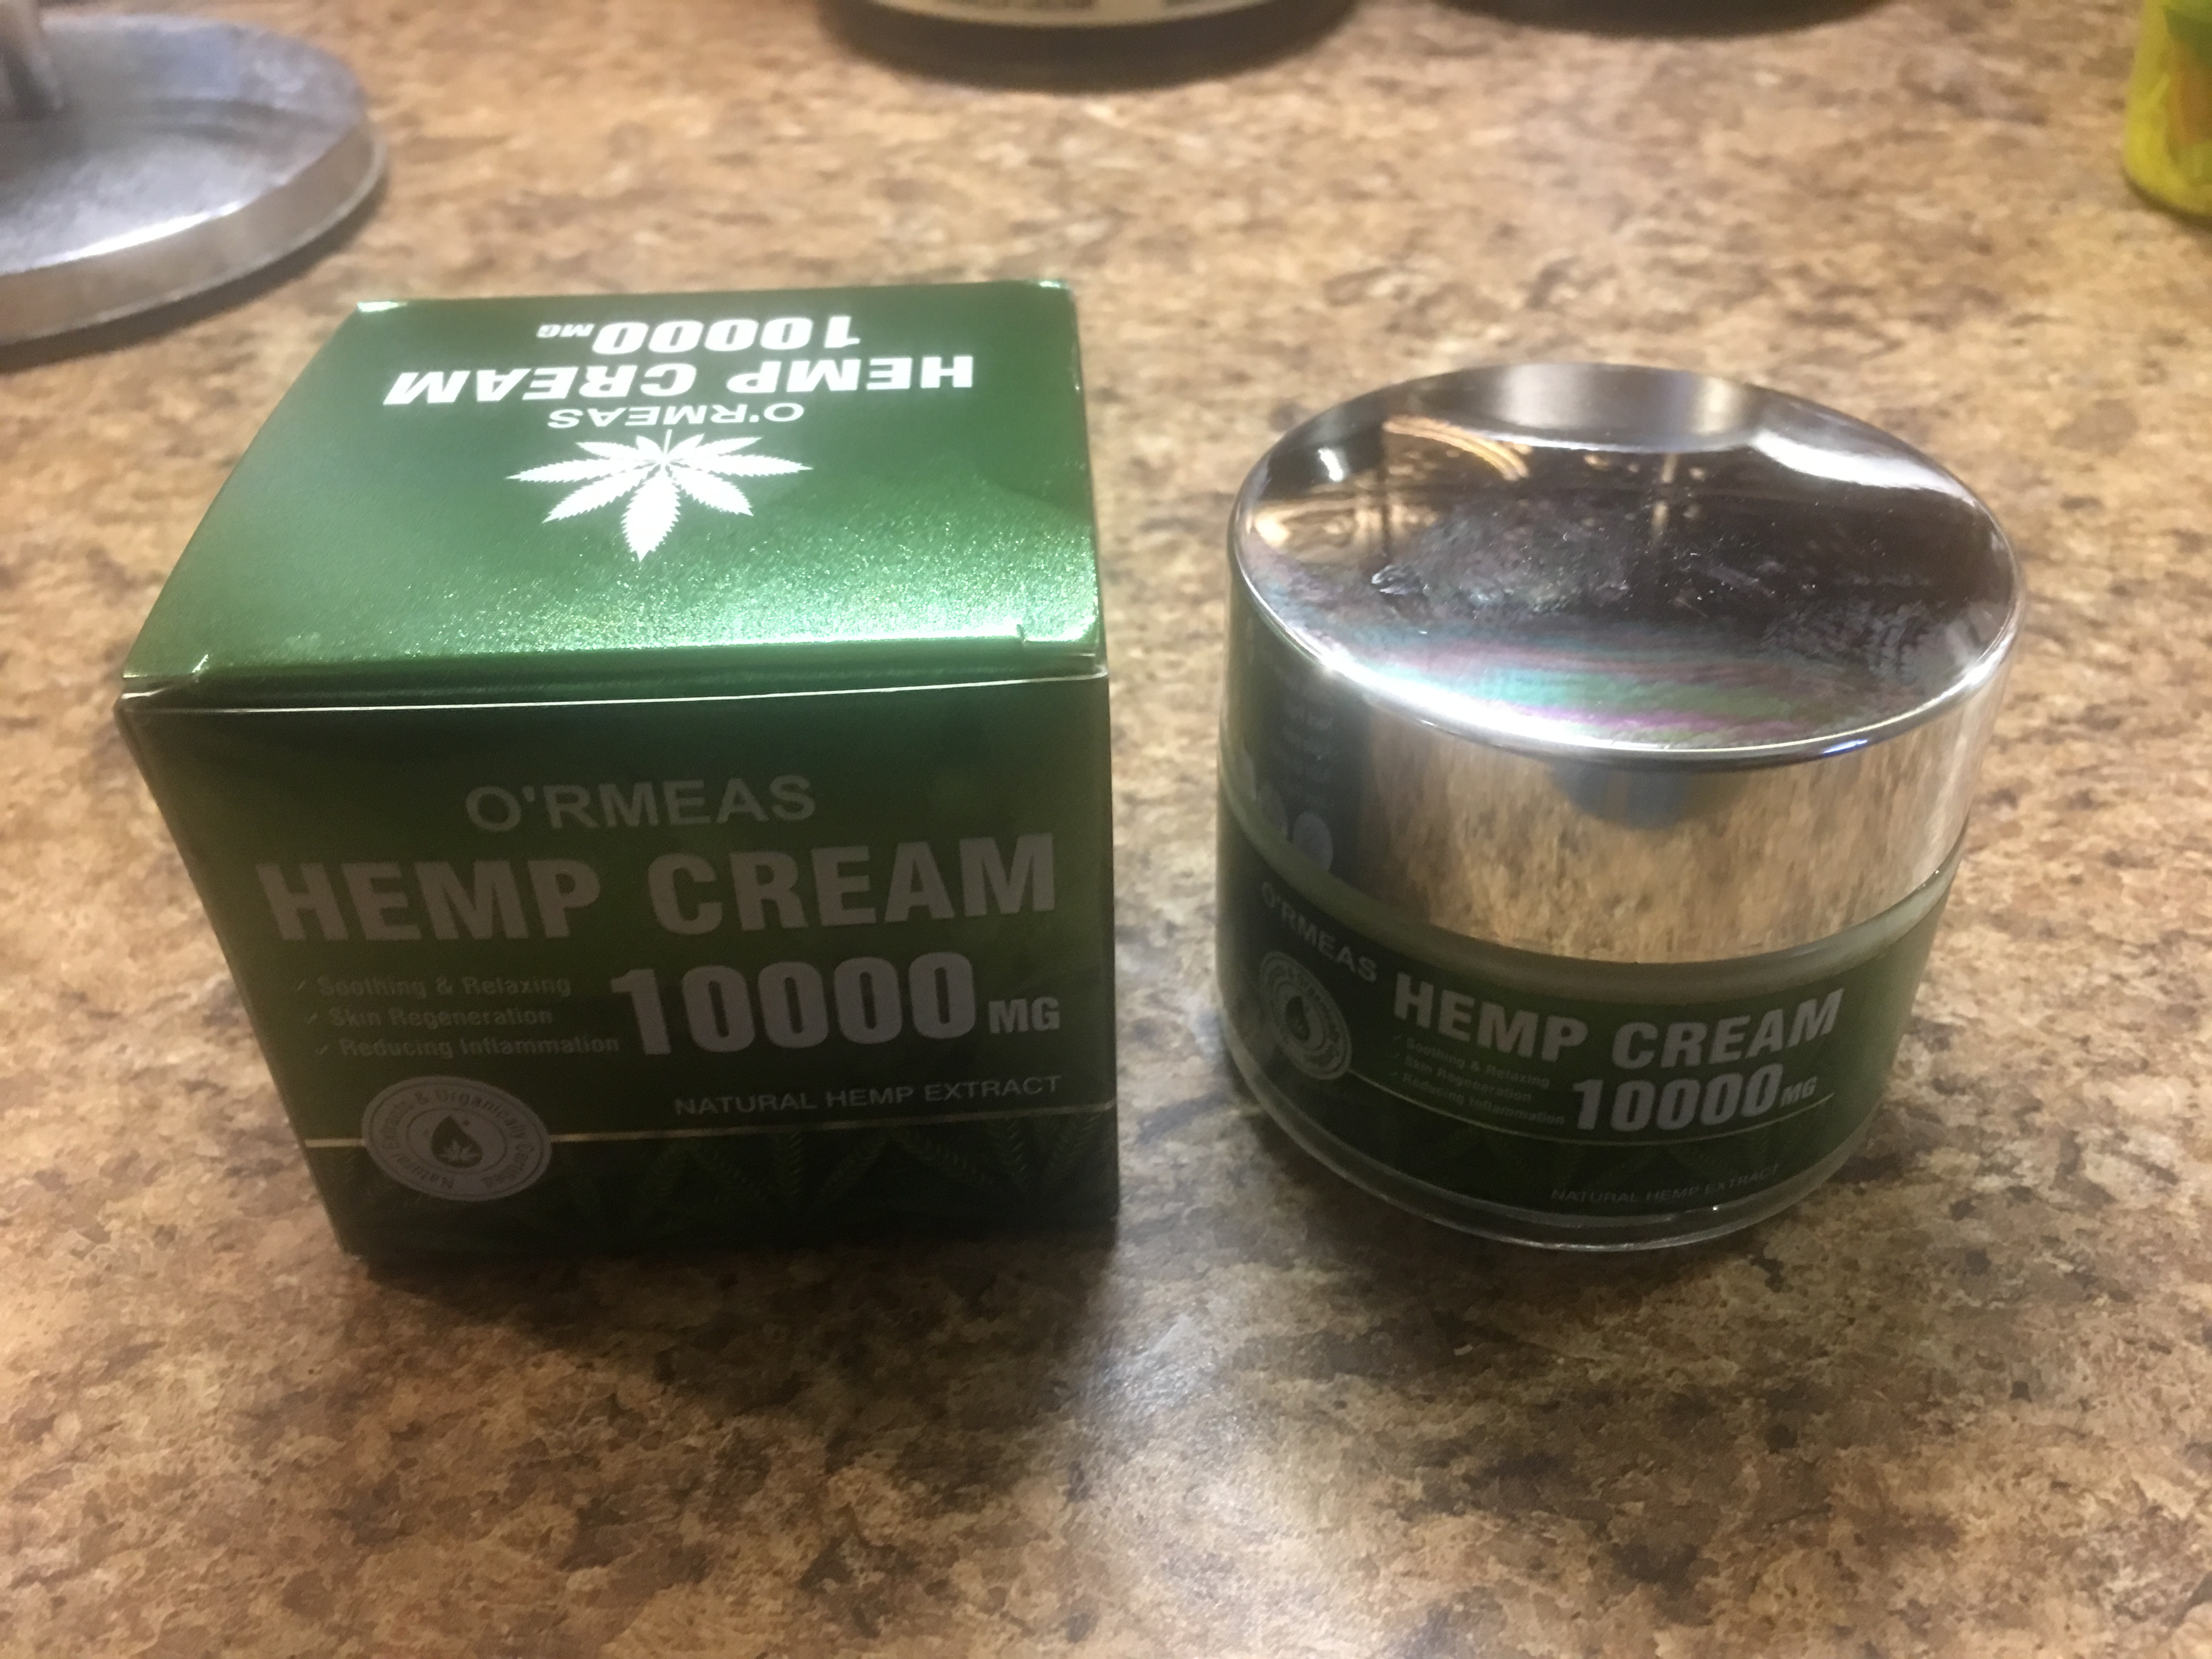 This stuff really works! O'rmeas Hemp Cream for pain